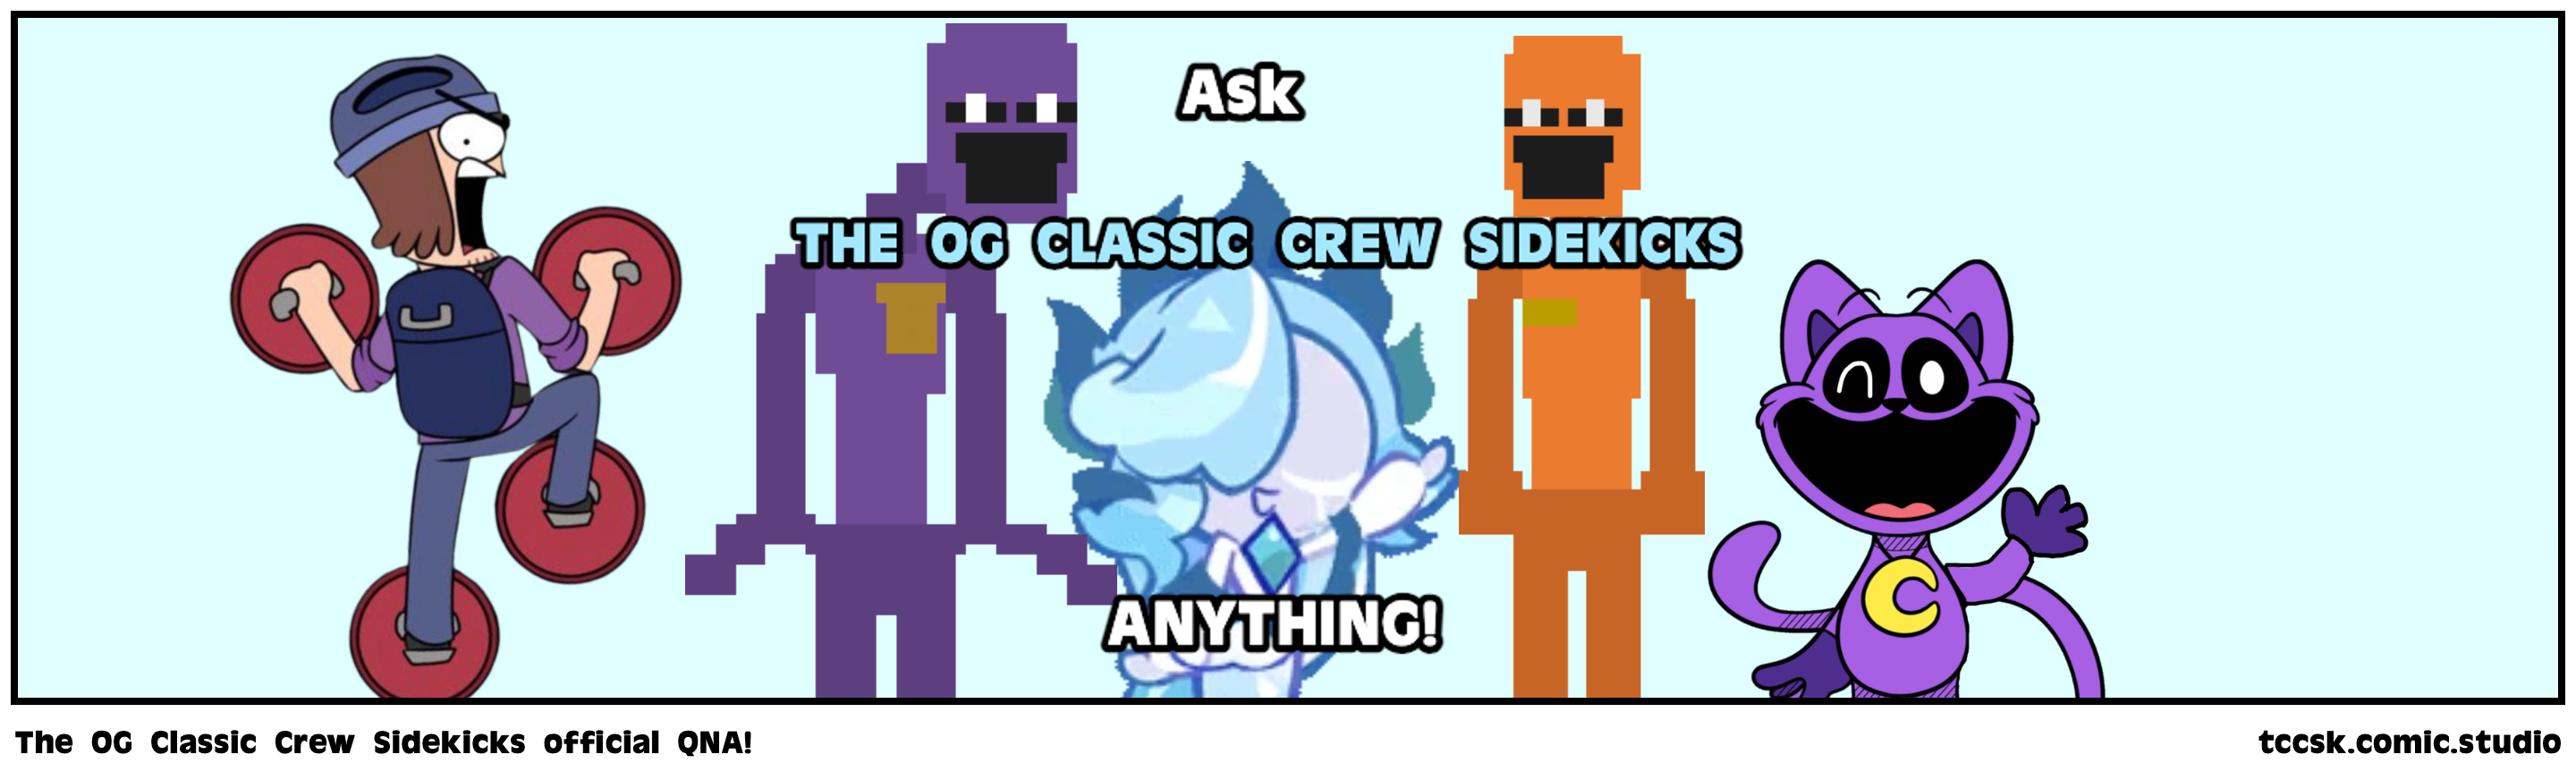 The OG Classic Crew Sidekicks official QNA!